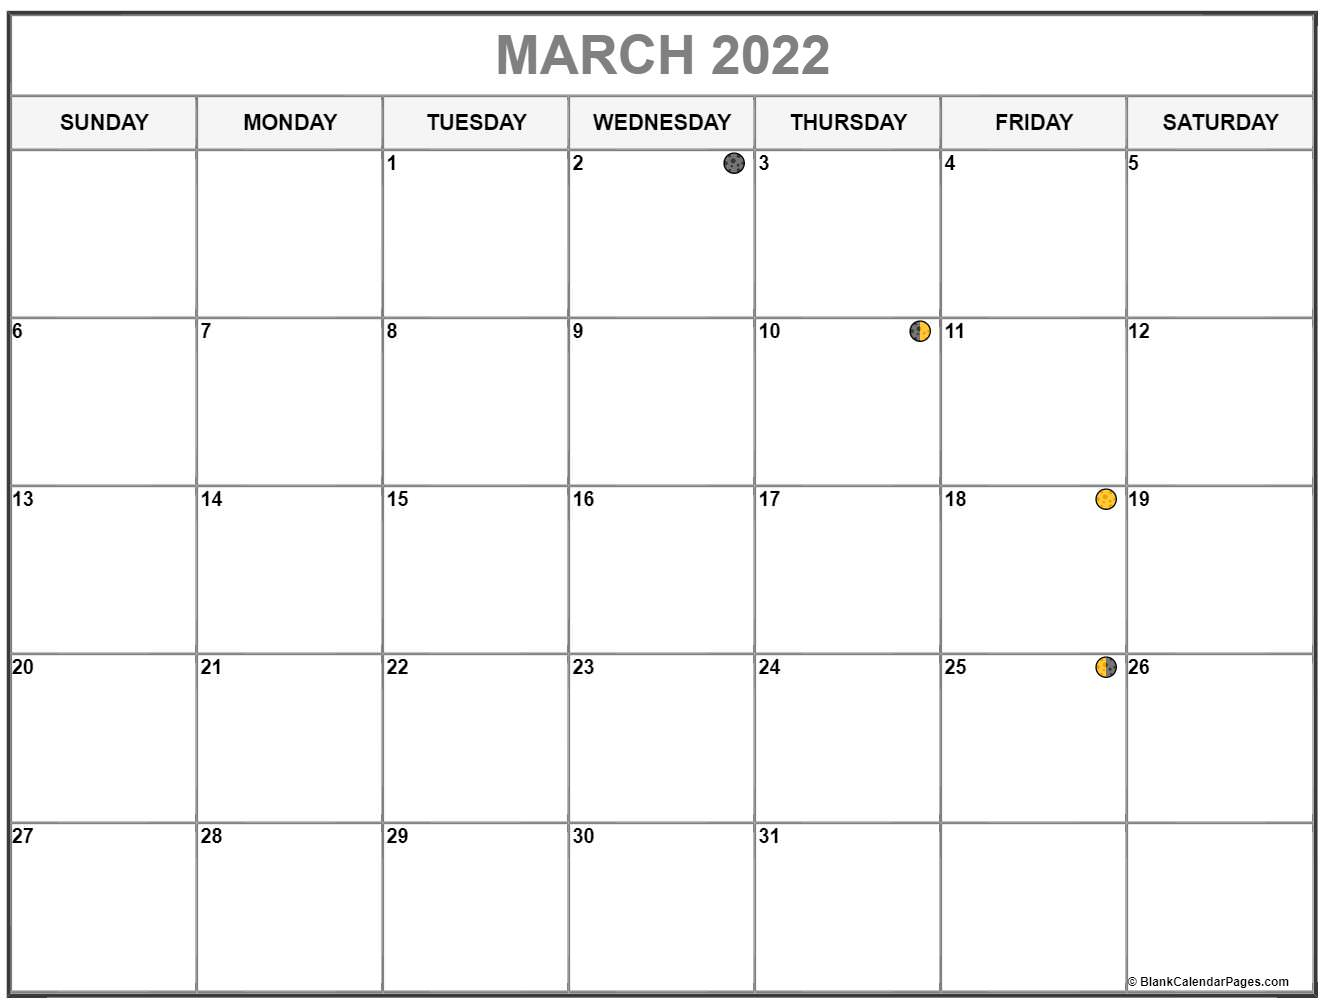 Get January 23 2022 Calendar